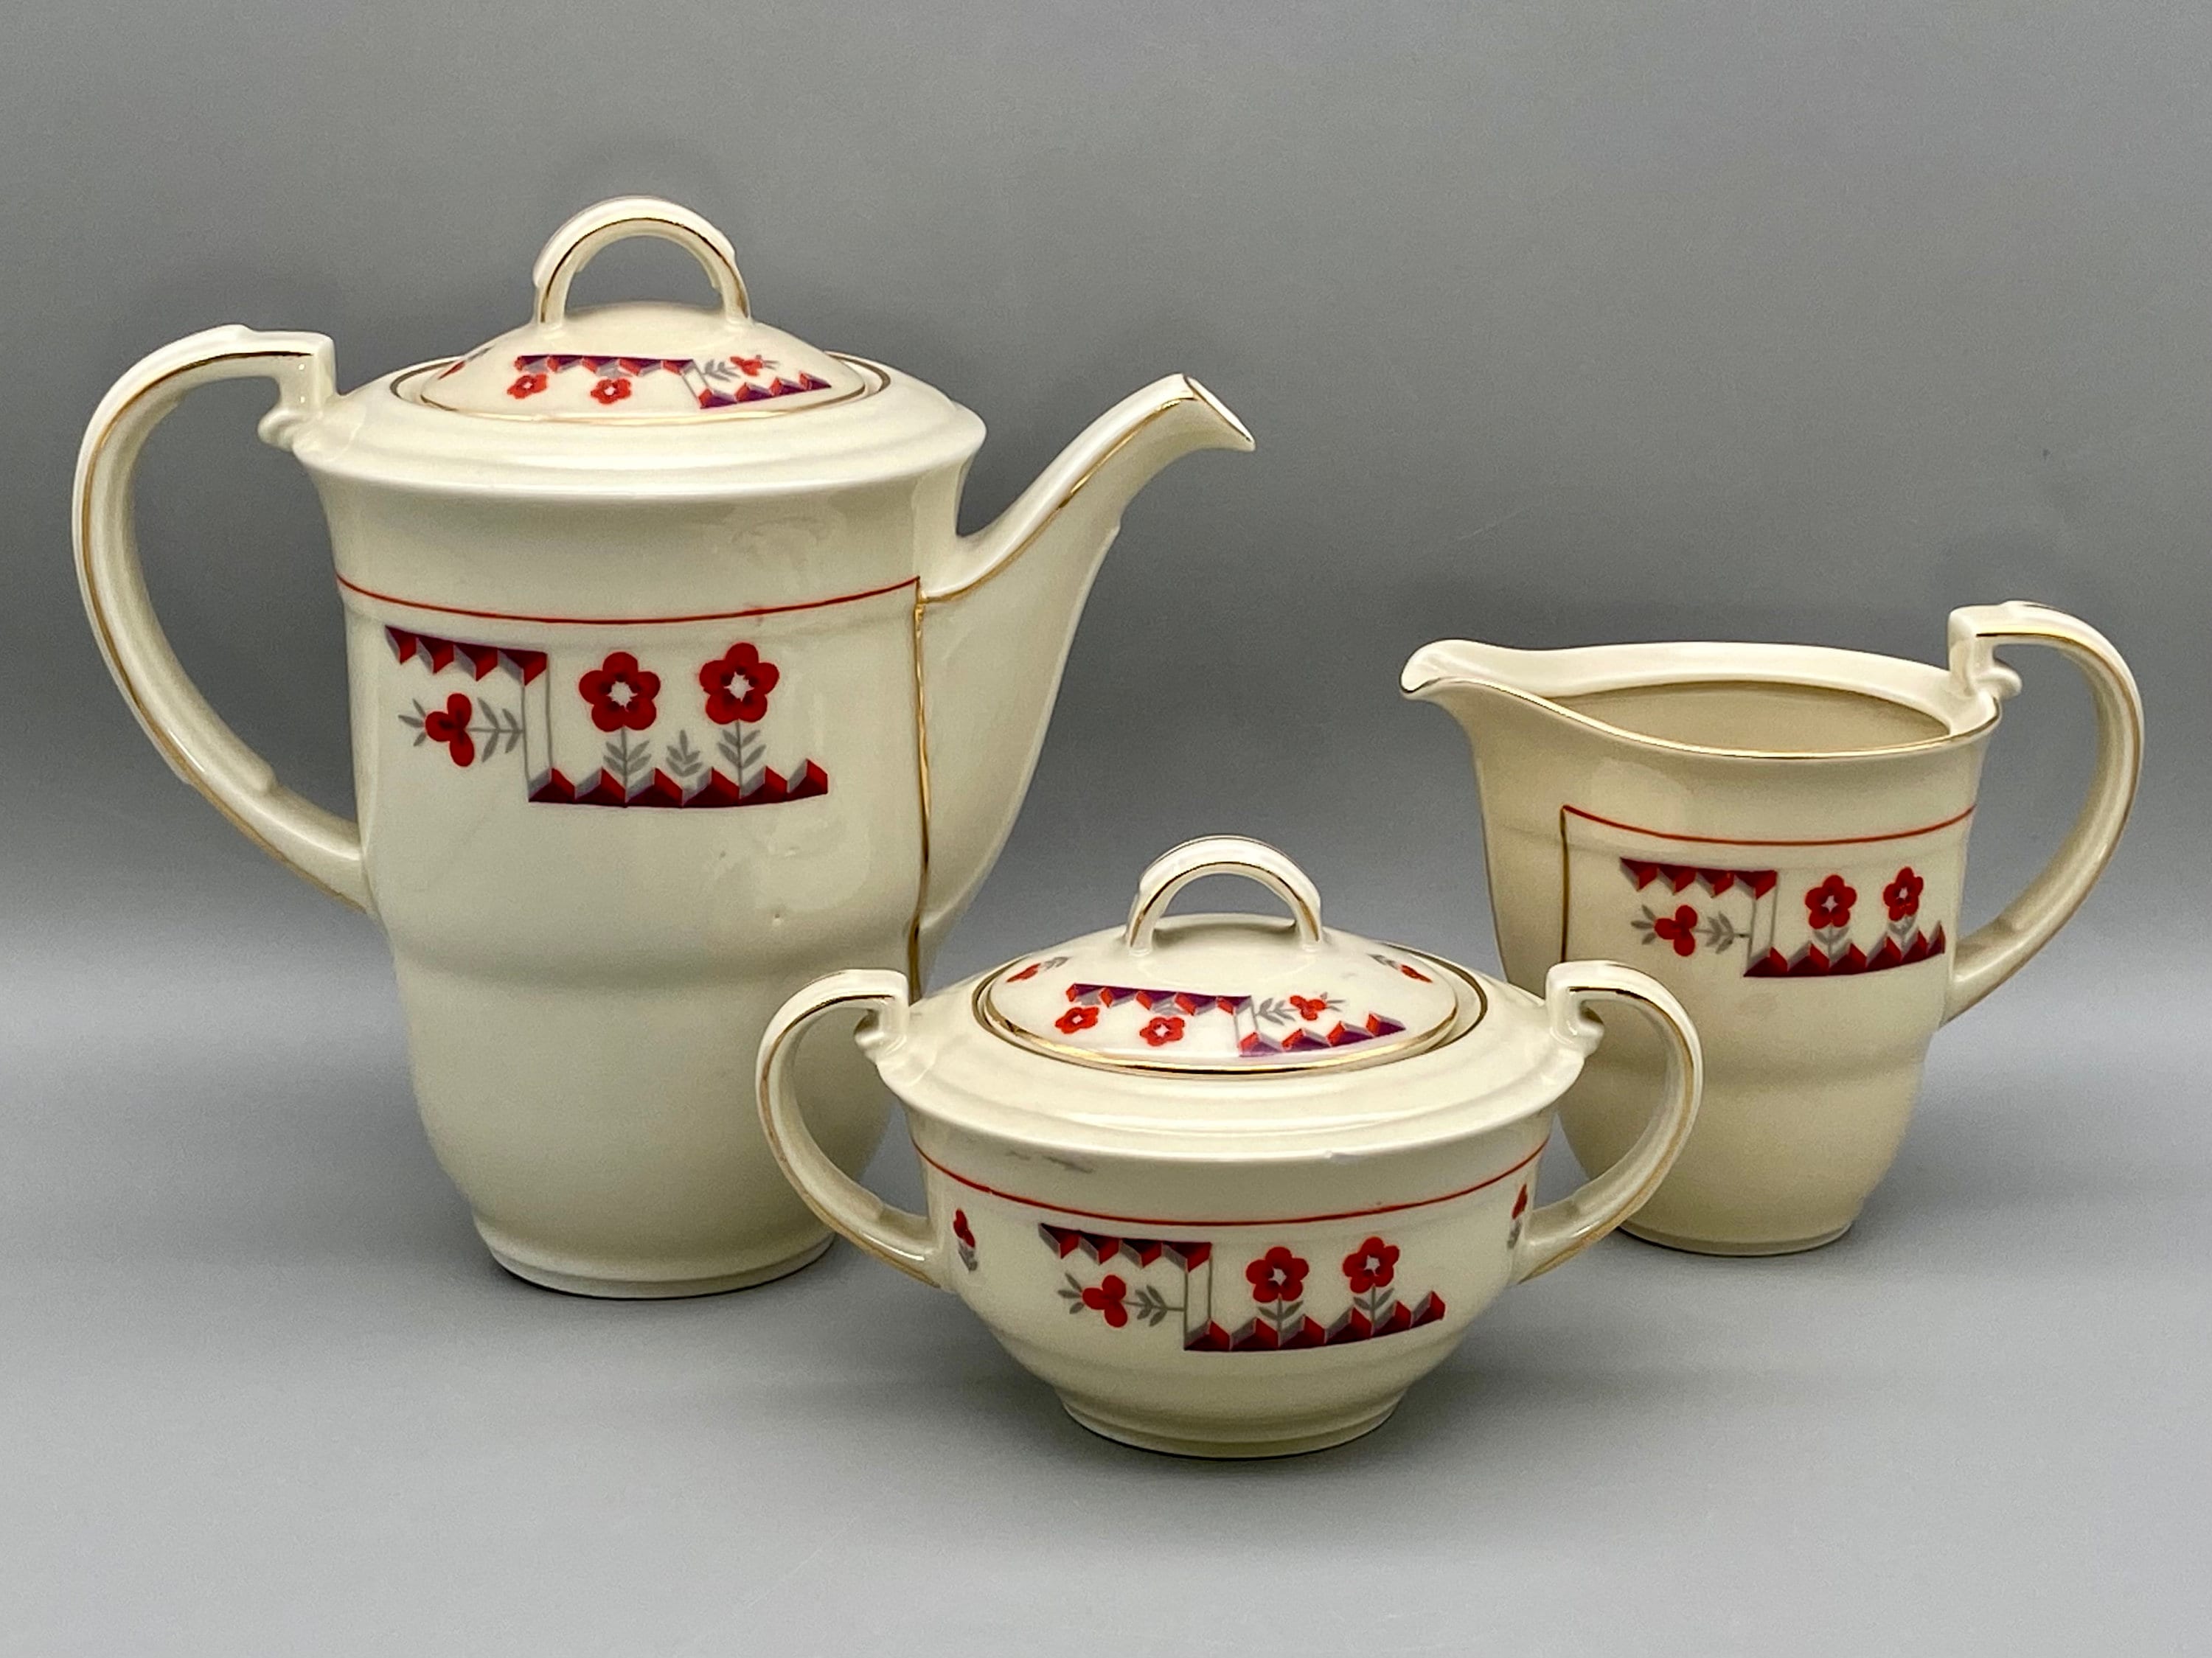 Eva tea set: Modern teapot, tea cups, creamer, sugar bowl, serving